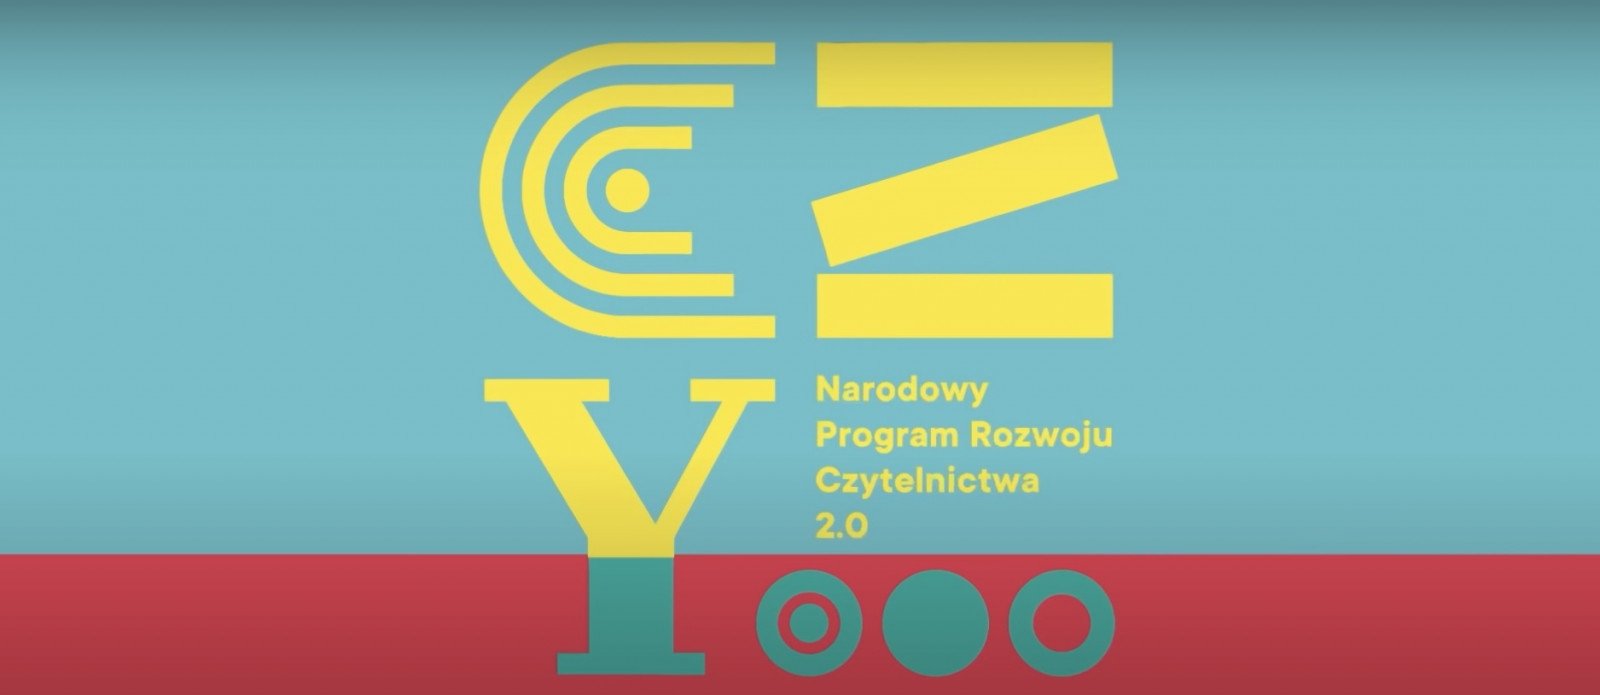 Litery N P R Cz i wielokropek - logo Programu